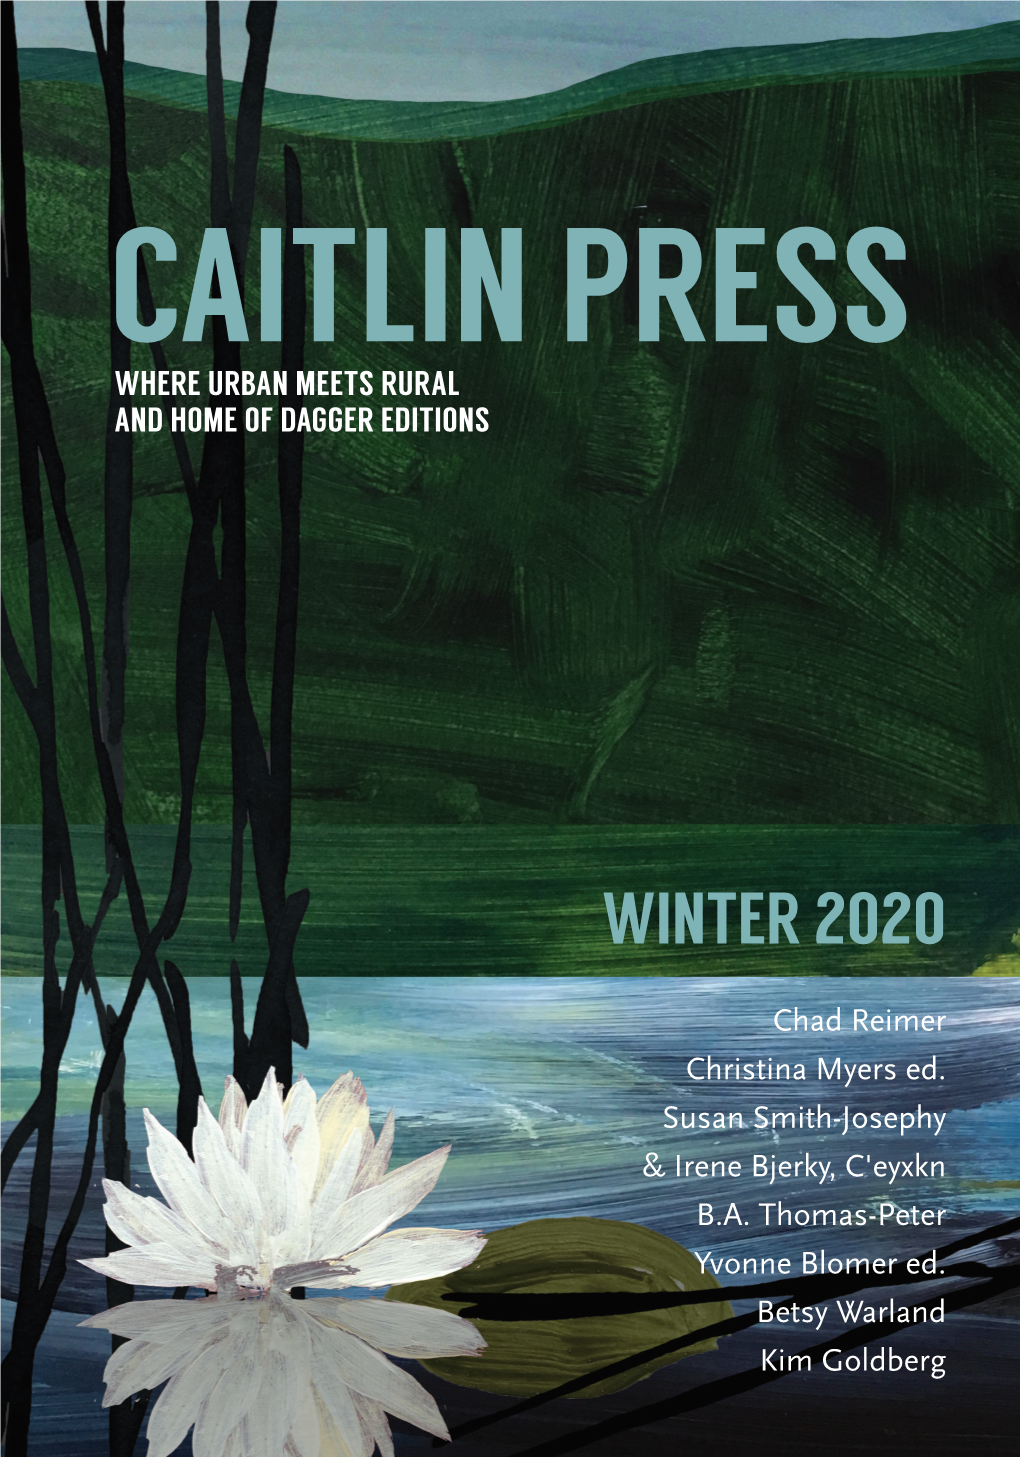 Winter 2020 Catalogue